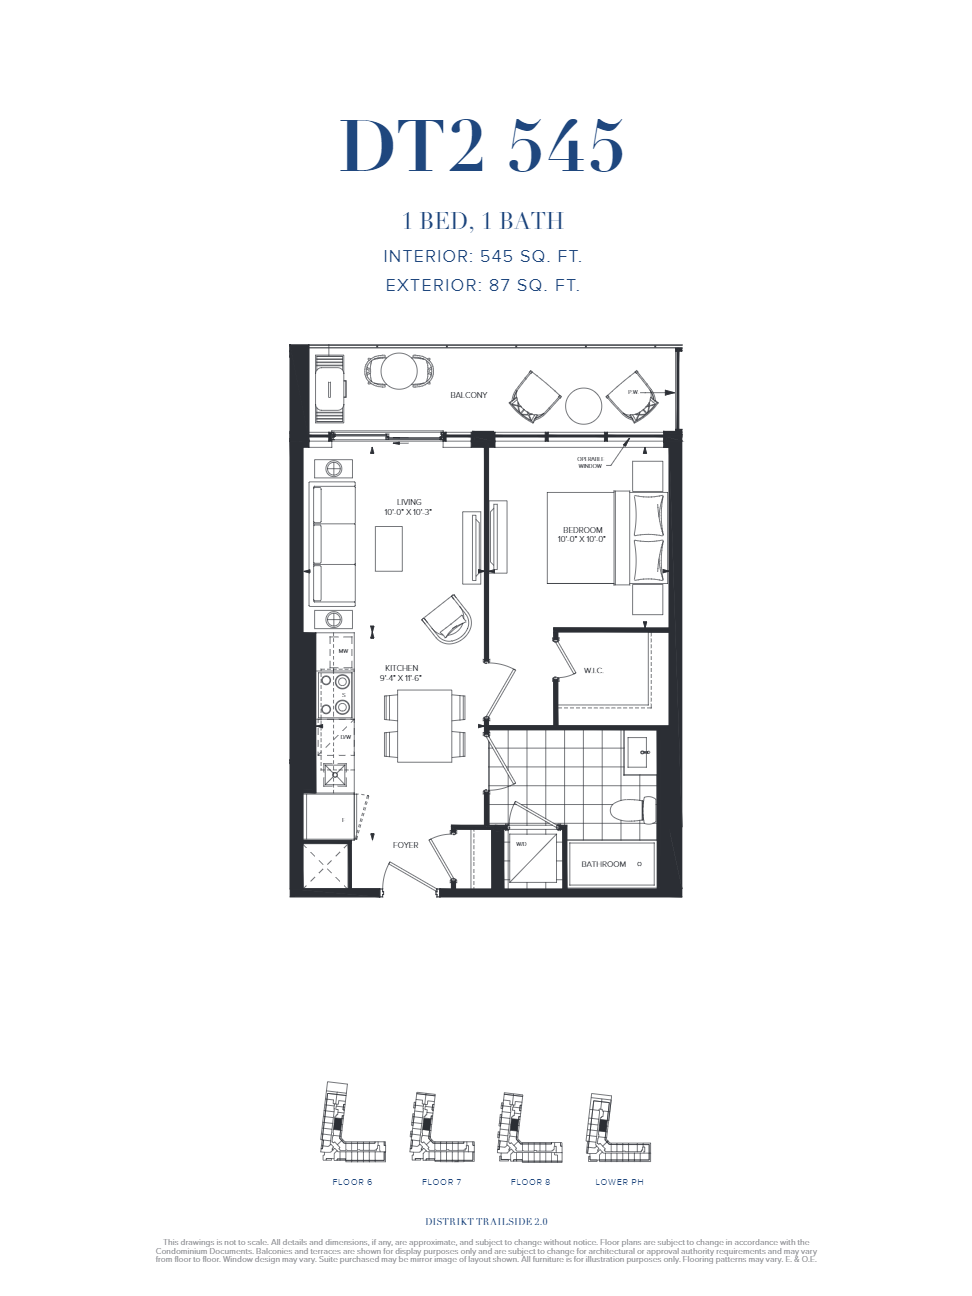  Floor Plan of Distrikt Trailside 2.0 Condos with undefined beds